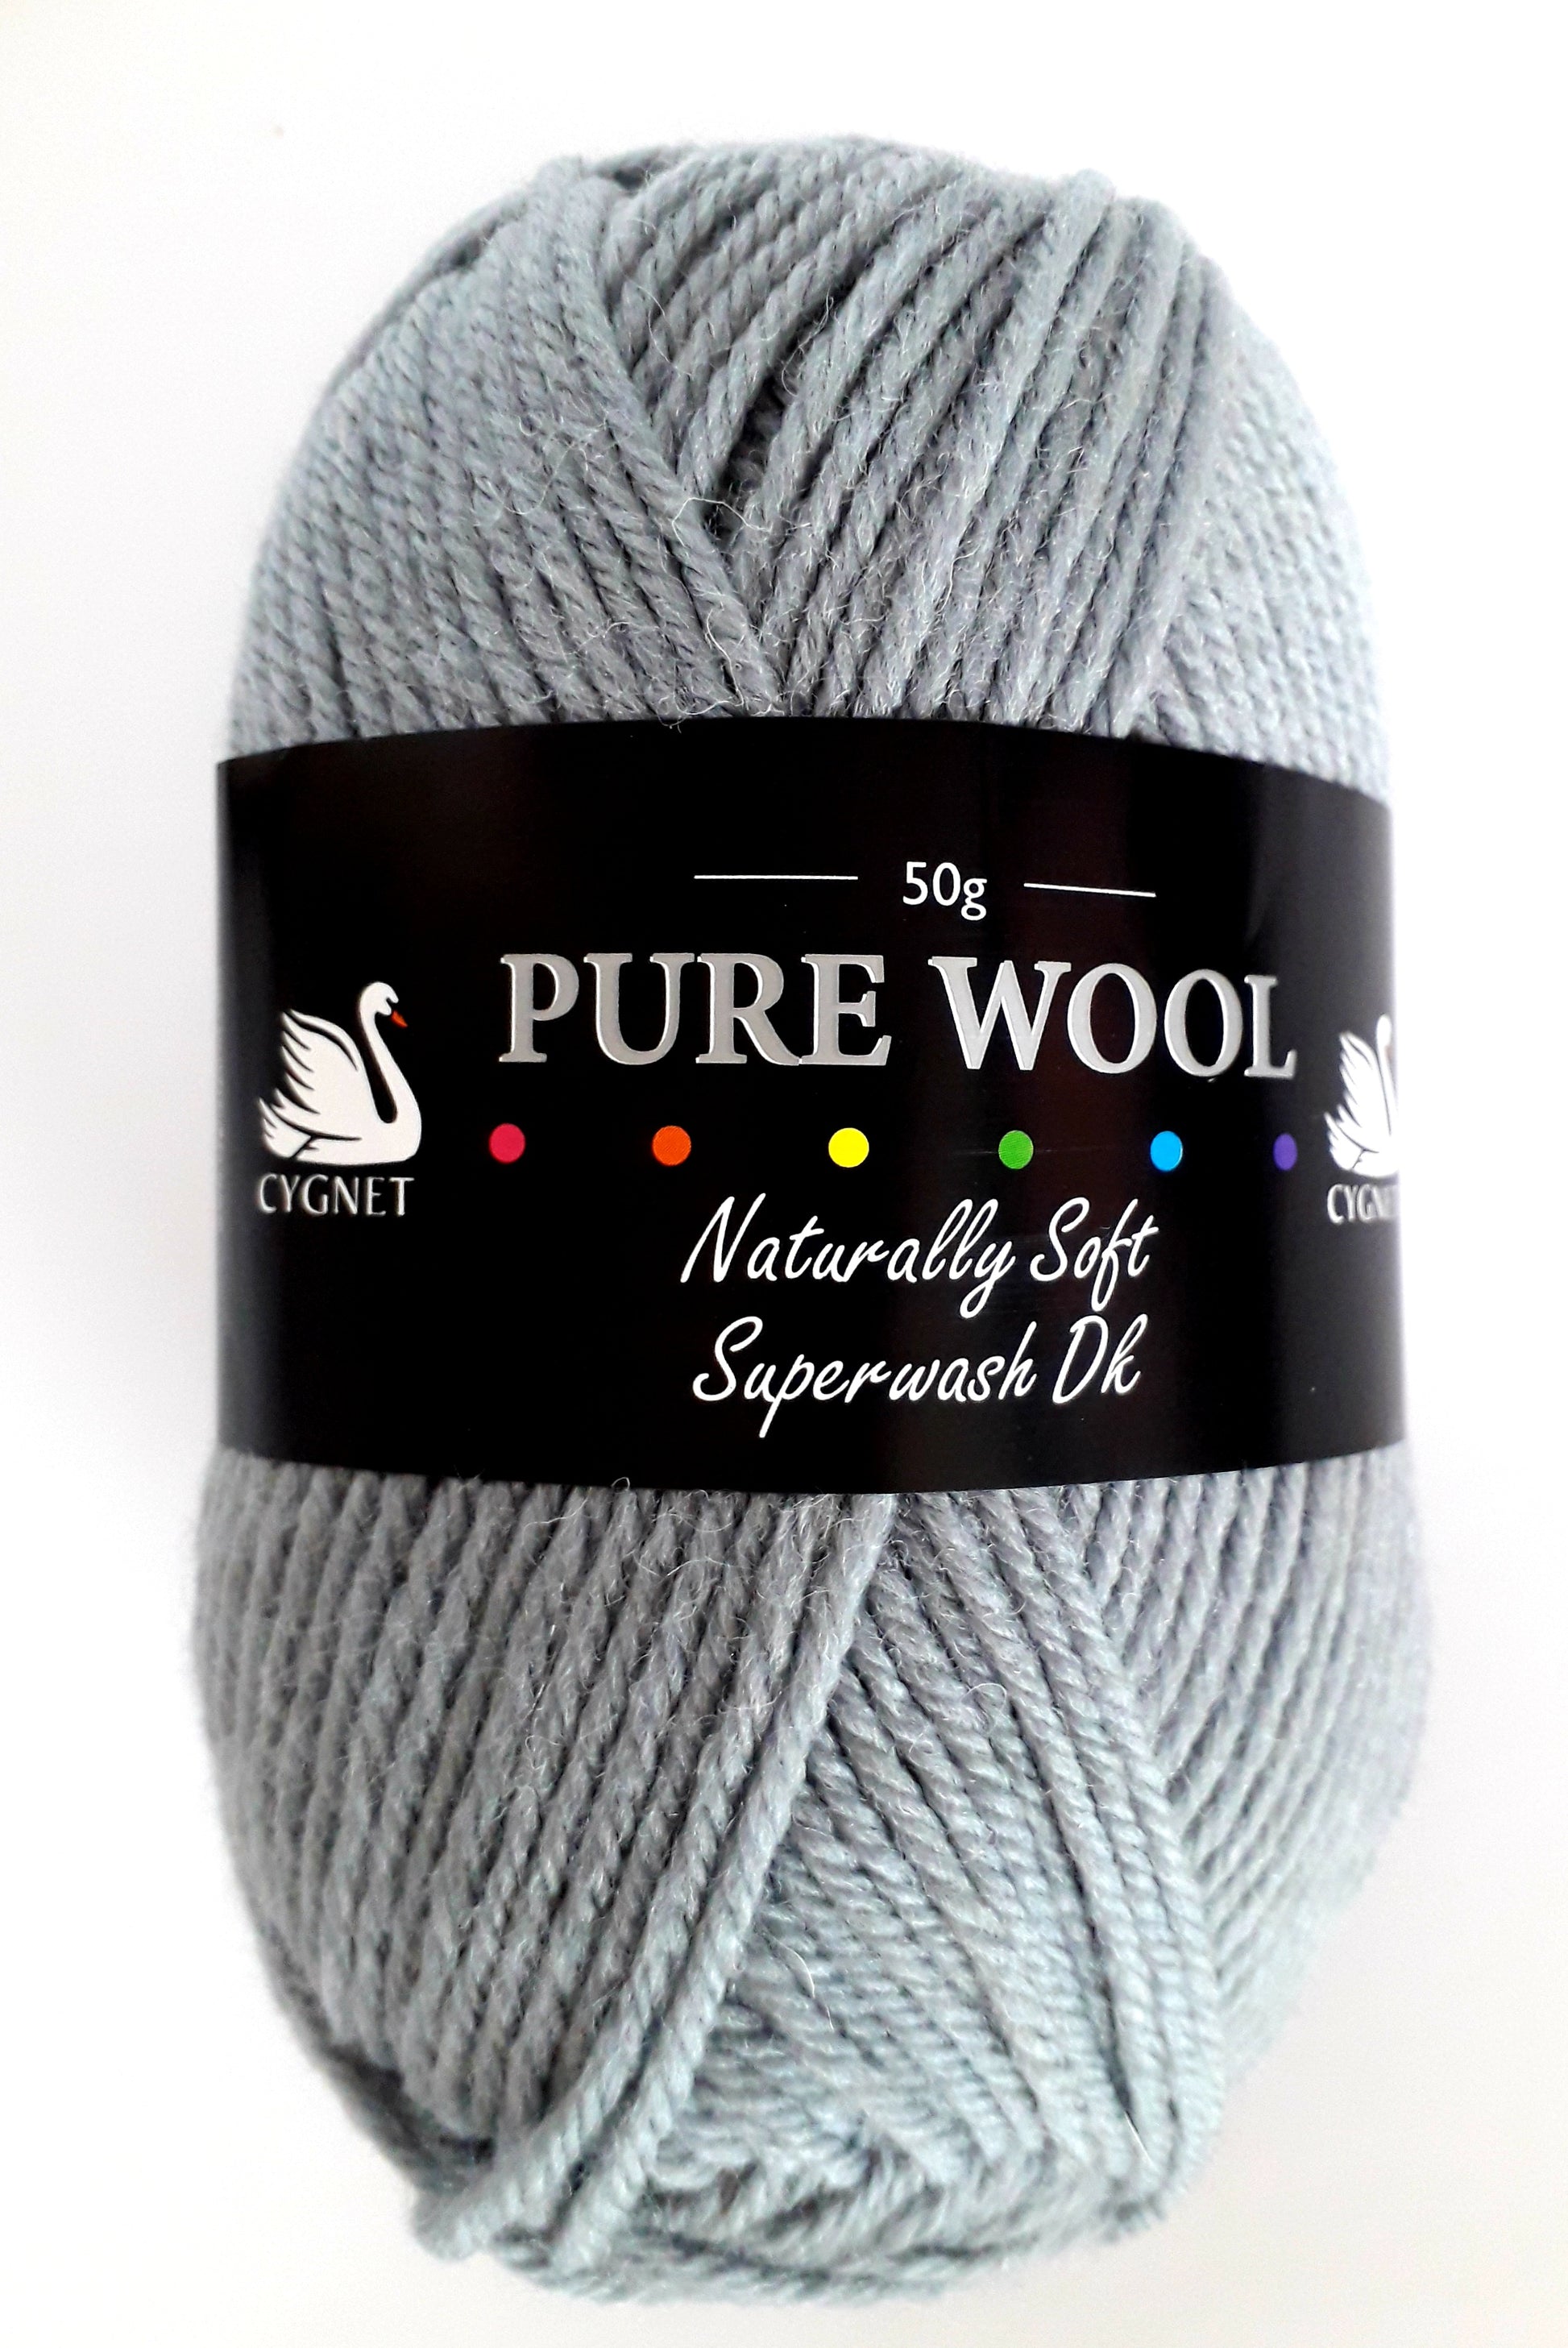 Cygnet Pure Wool Superwash DK 50g